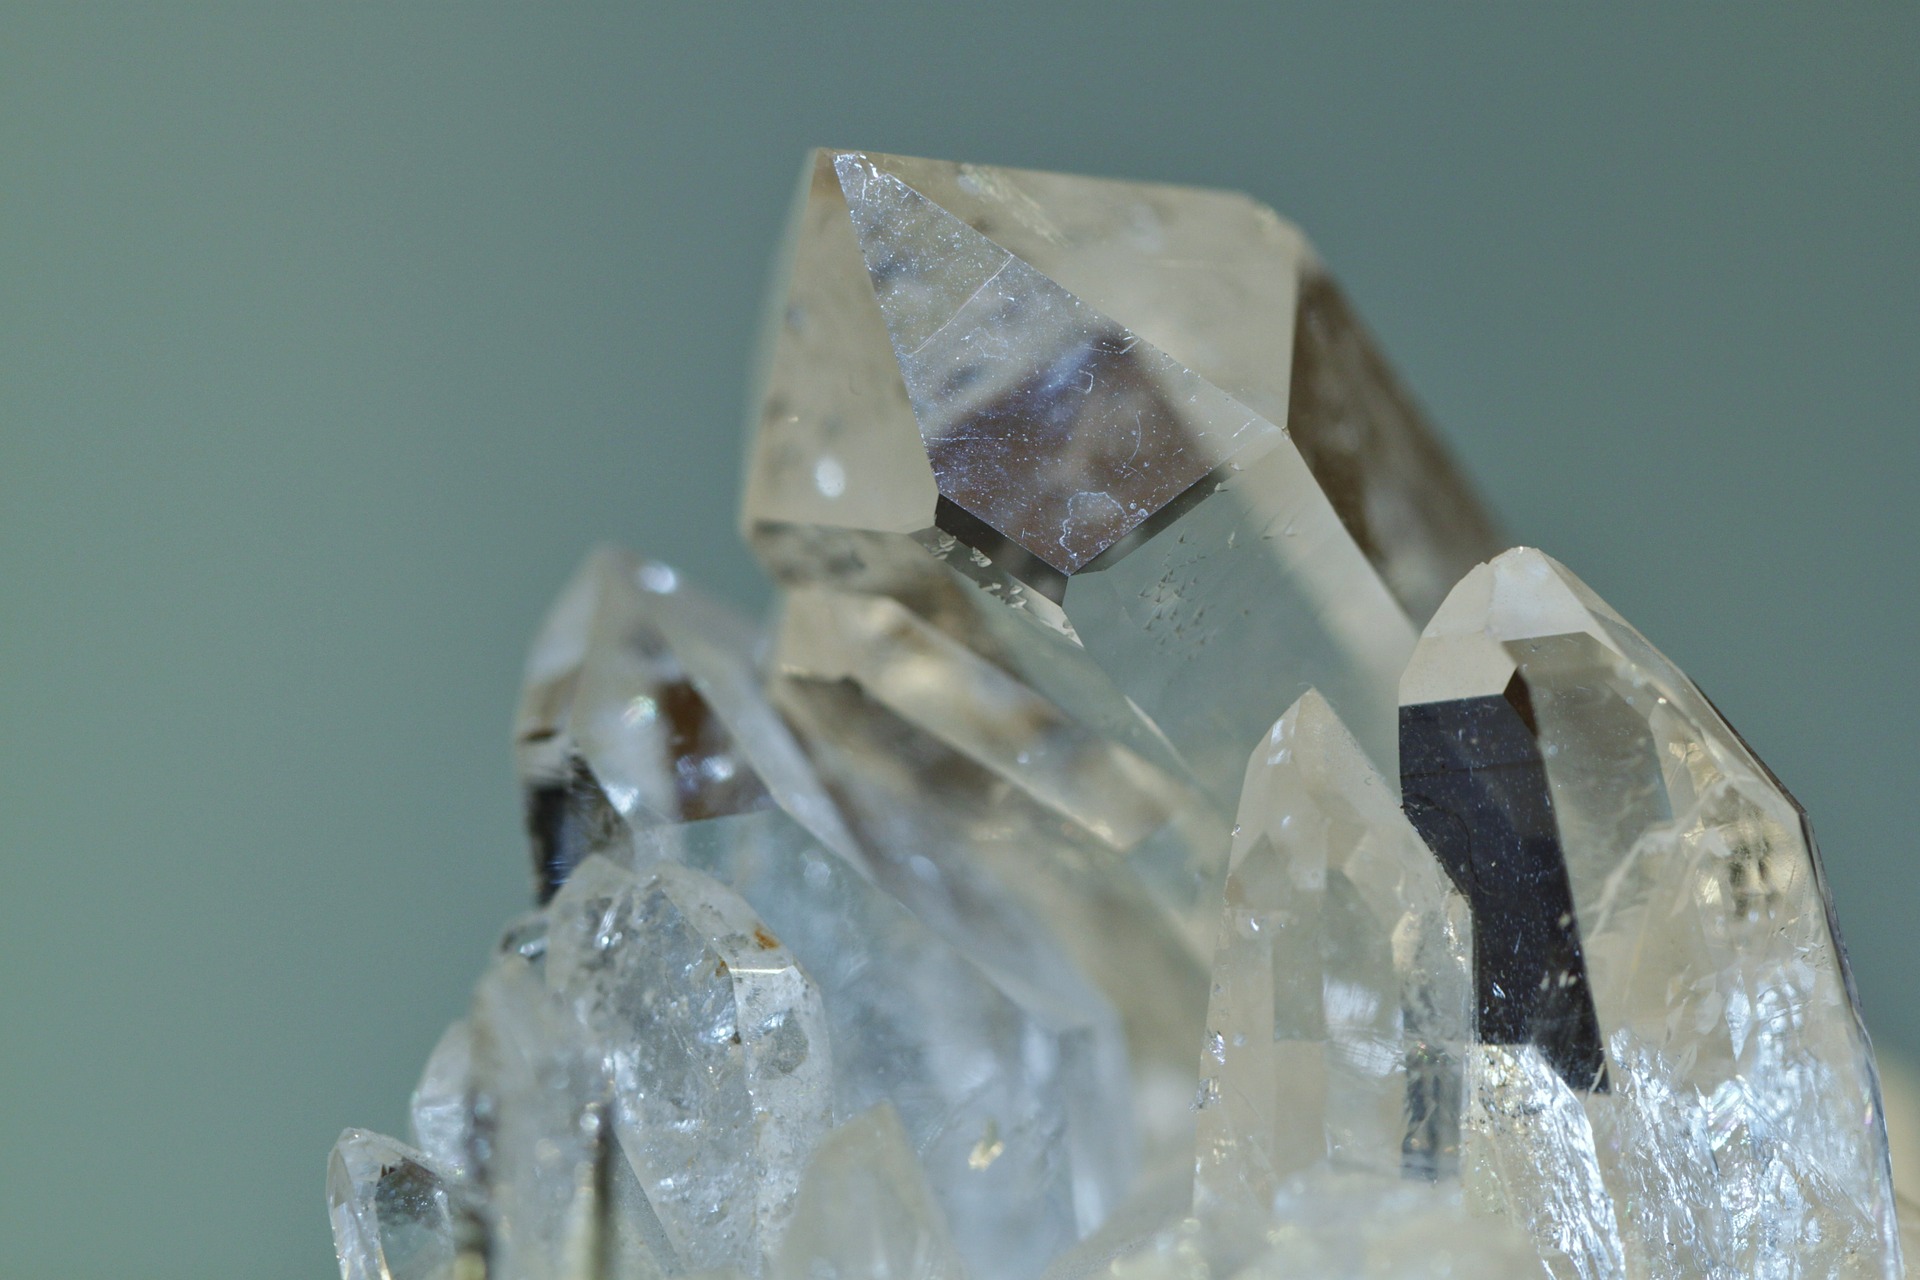 rock-crystal